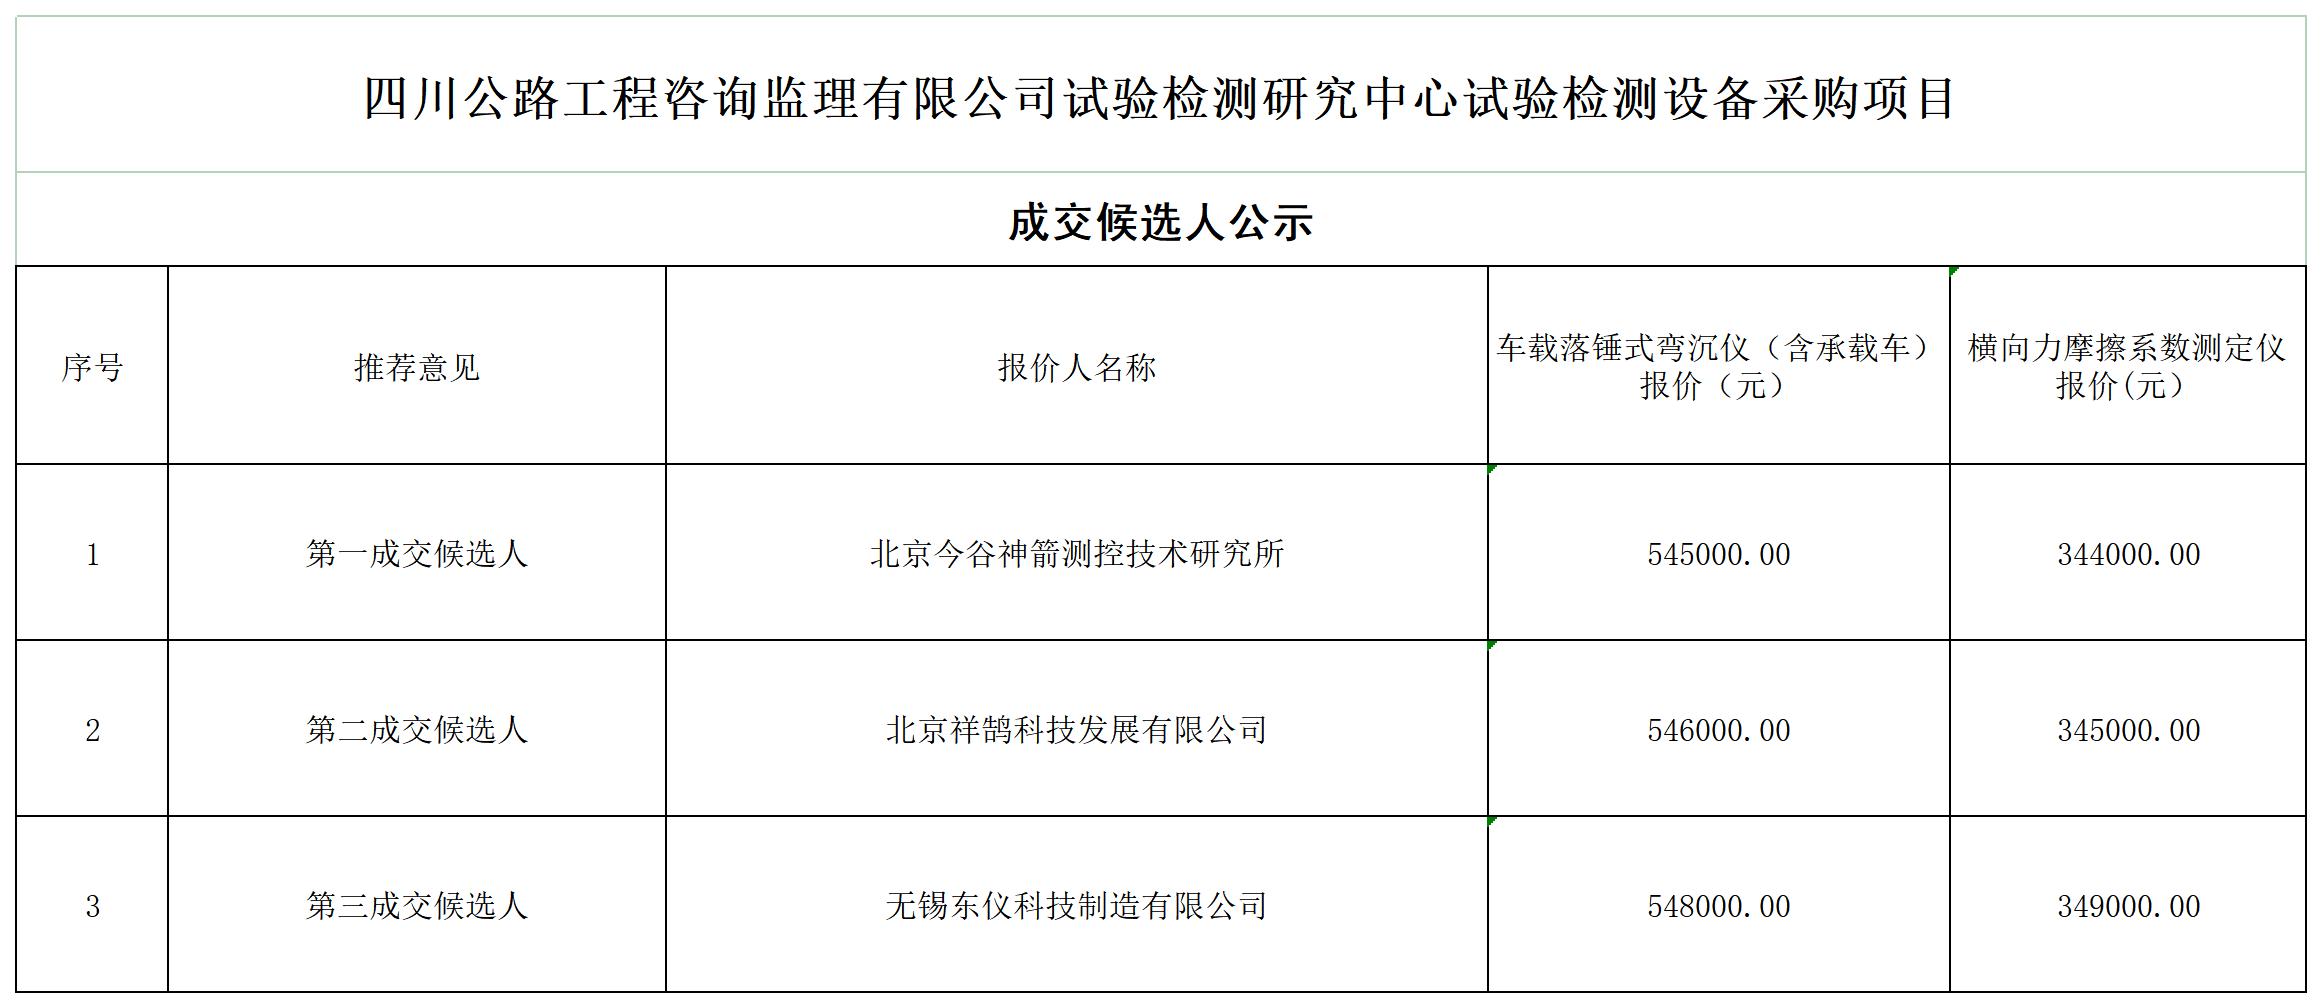 1ld乐动·体育（中国）官方网站试验检测研究中心试验检测设备采购项目_A1G6.jpg